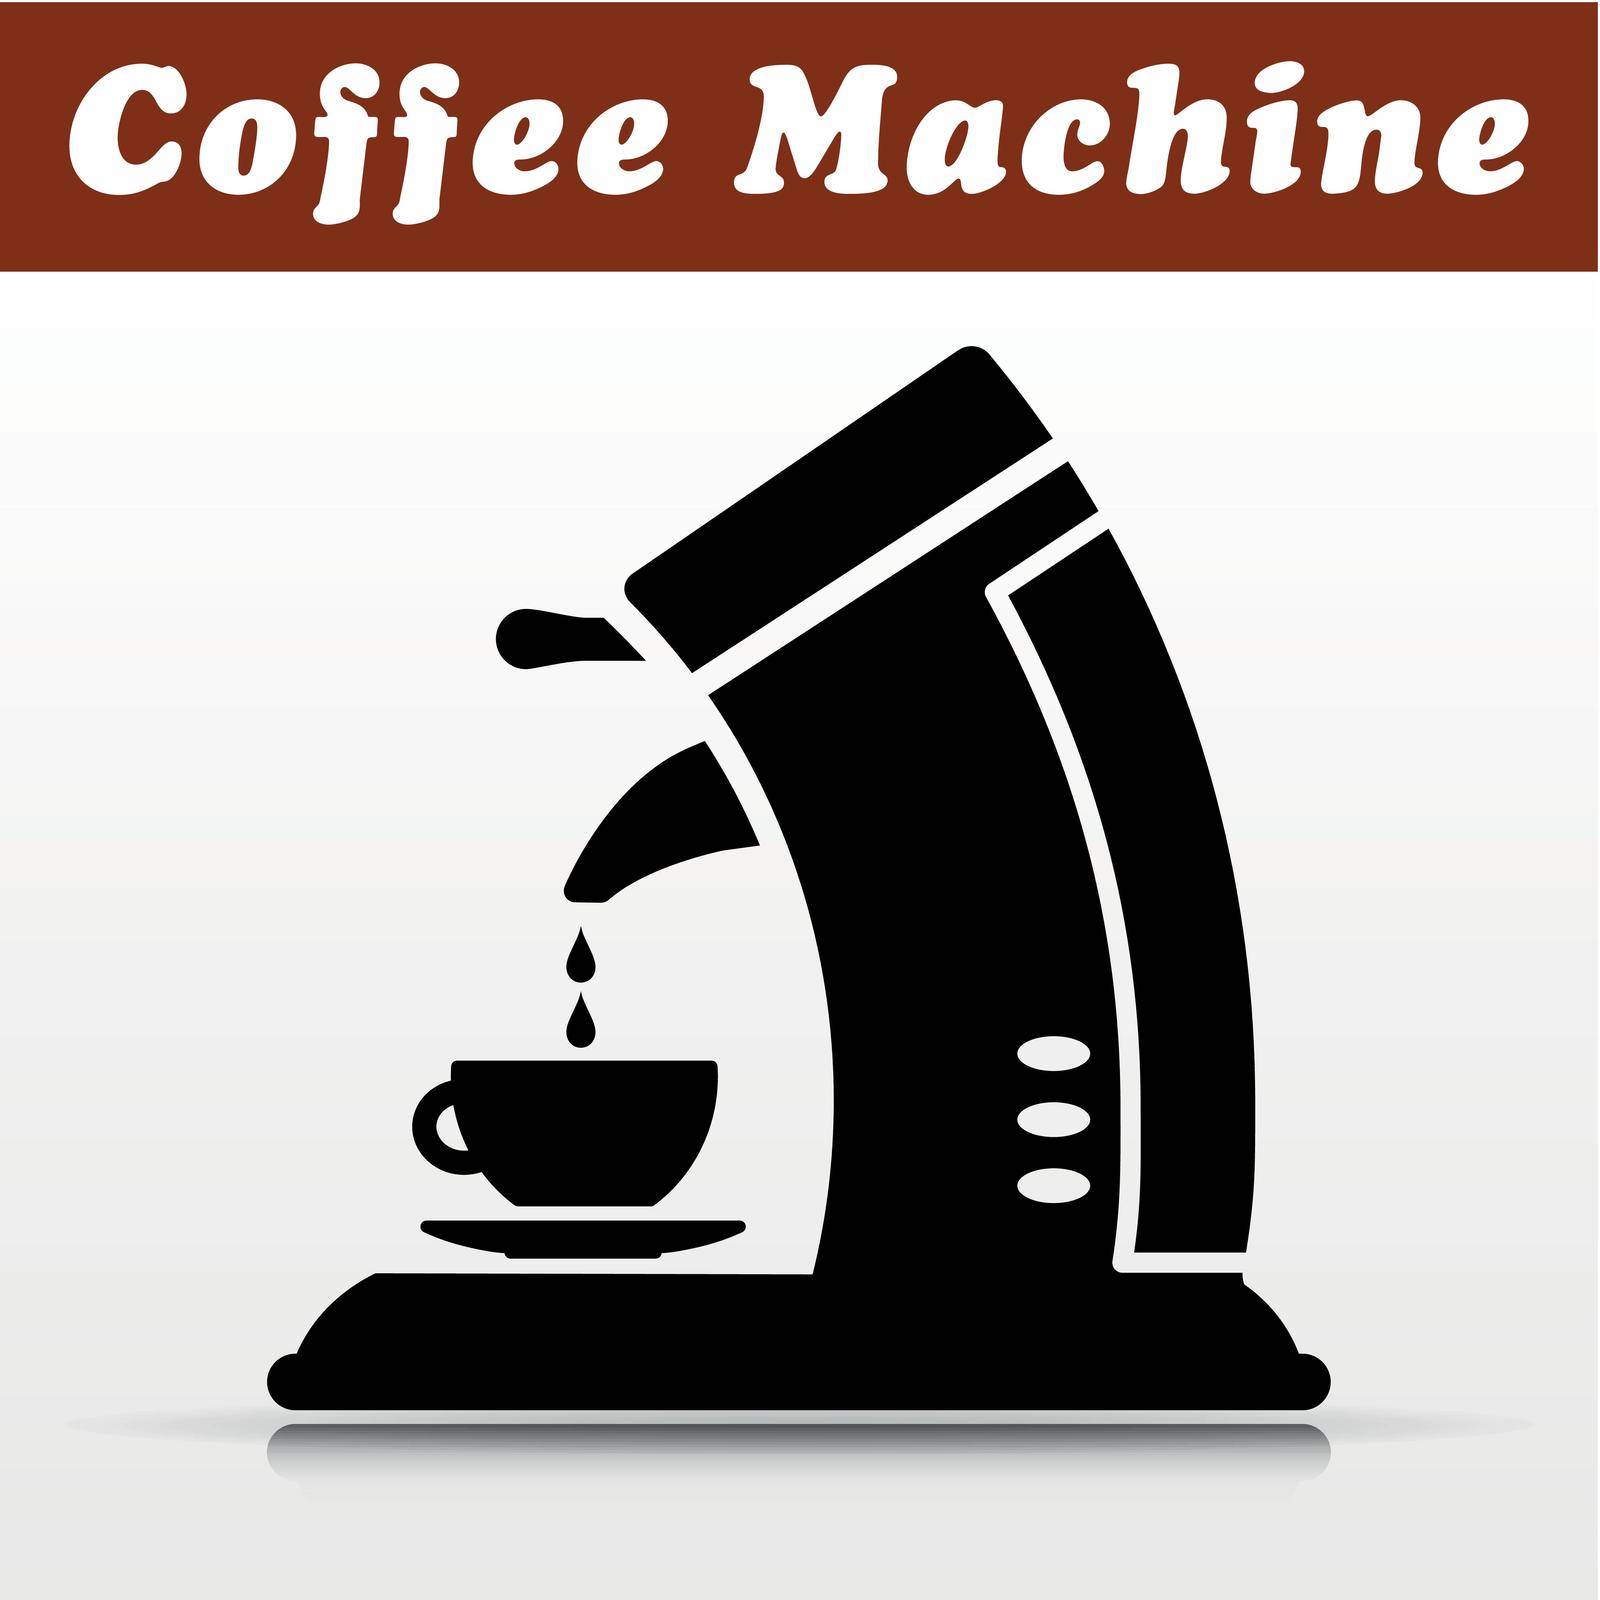 coffee machine vector icon design by Francois_Poirier